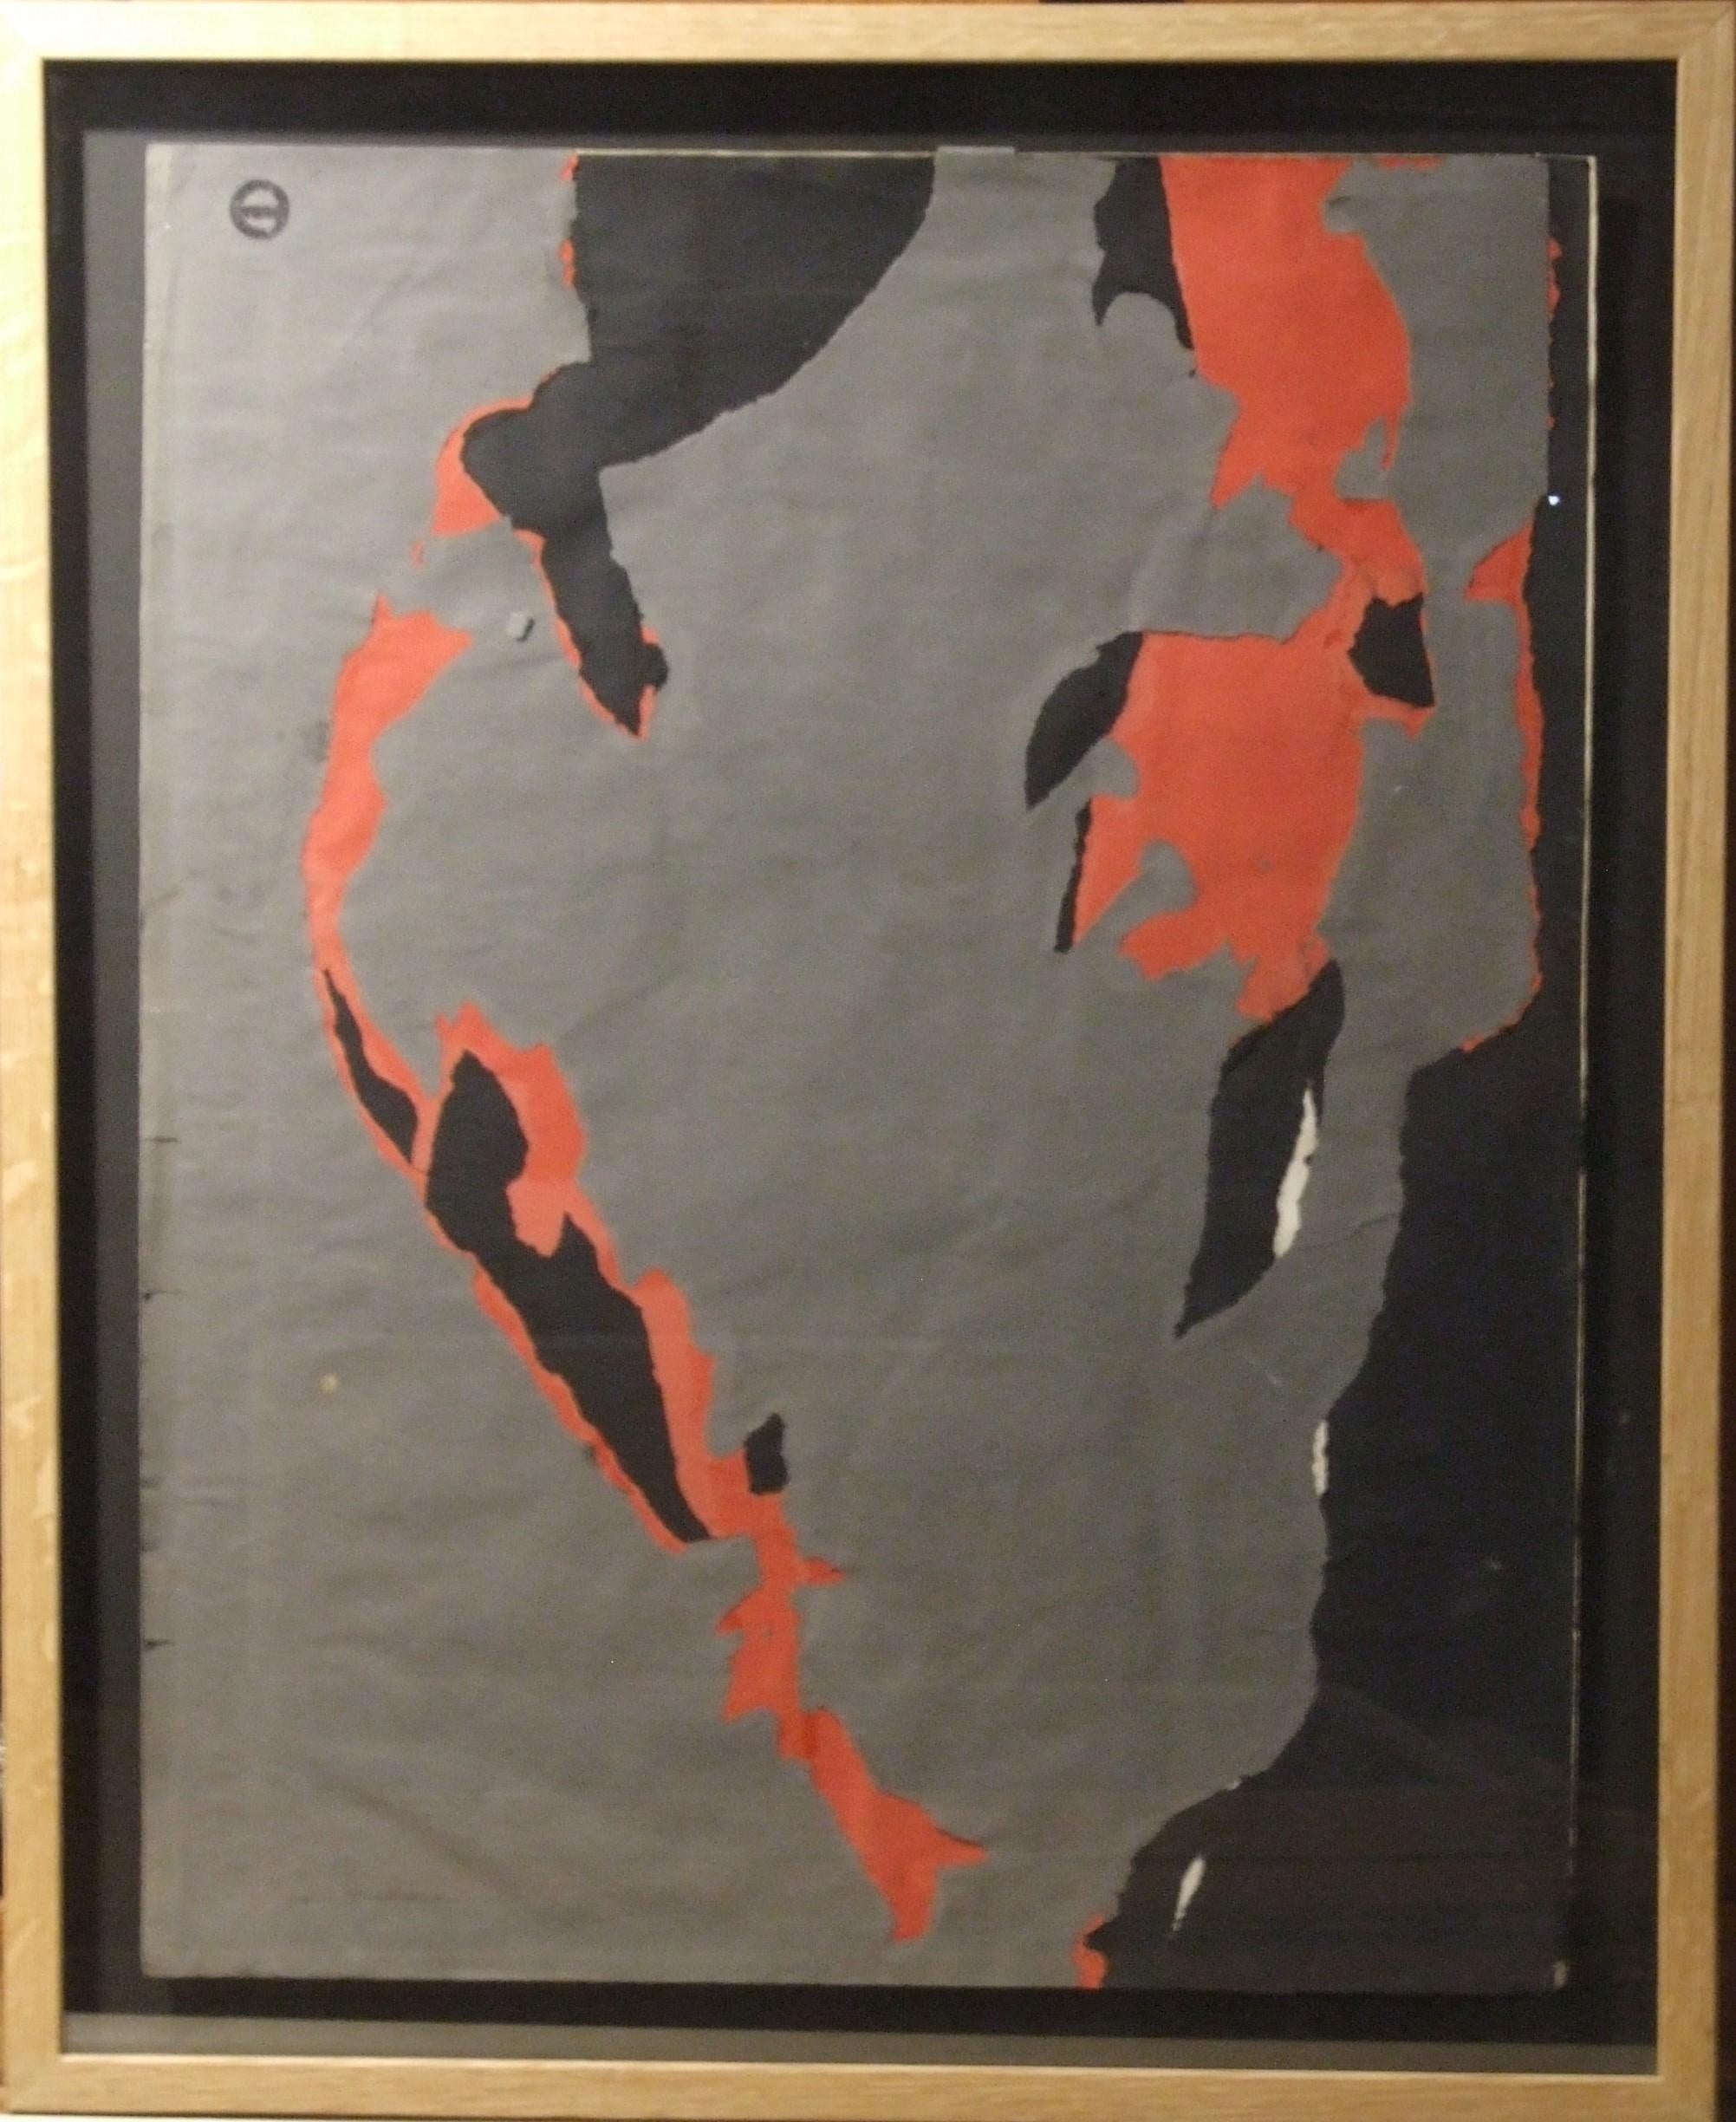 Abstract rouge et noir - gouache on paper, 64x50 cm., framed - Mixed Media Art by Albert Chubac